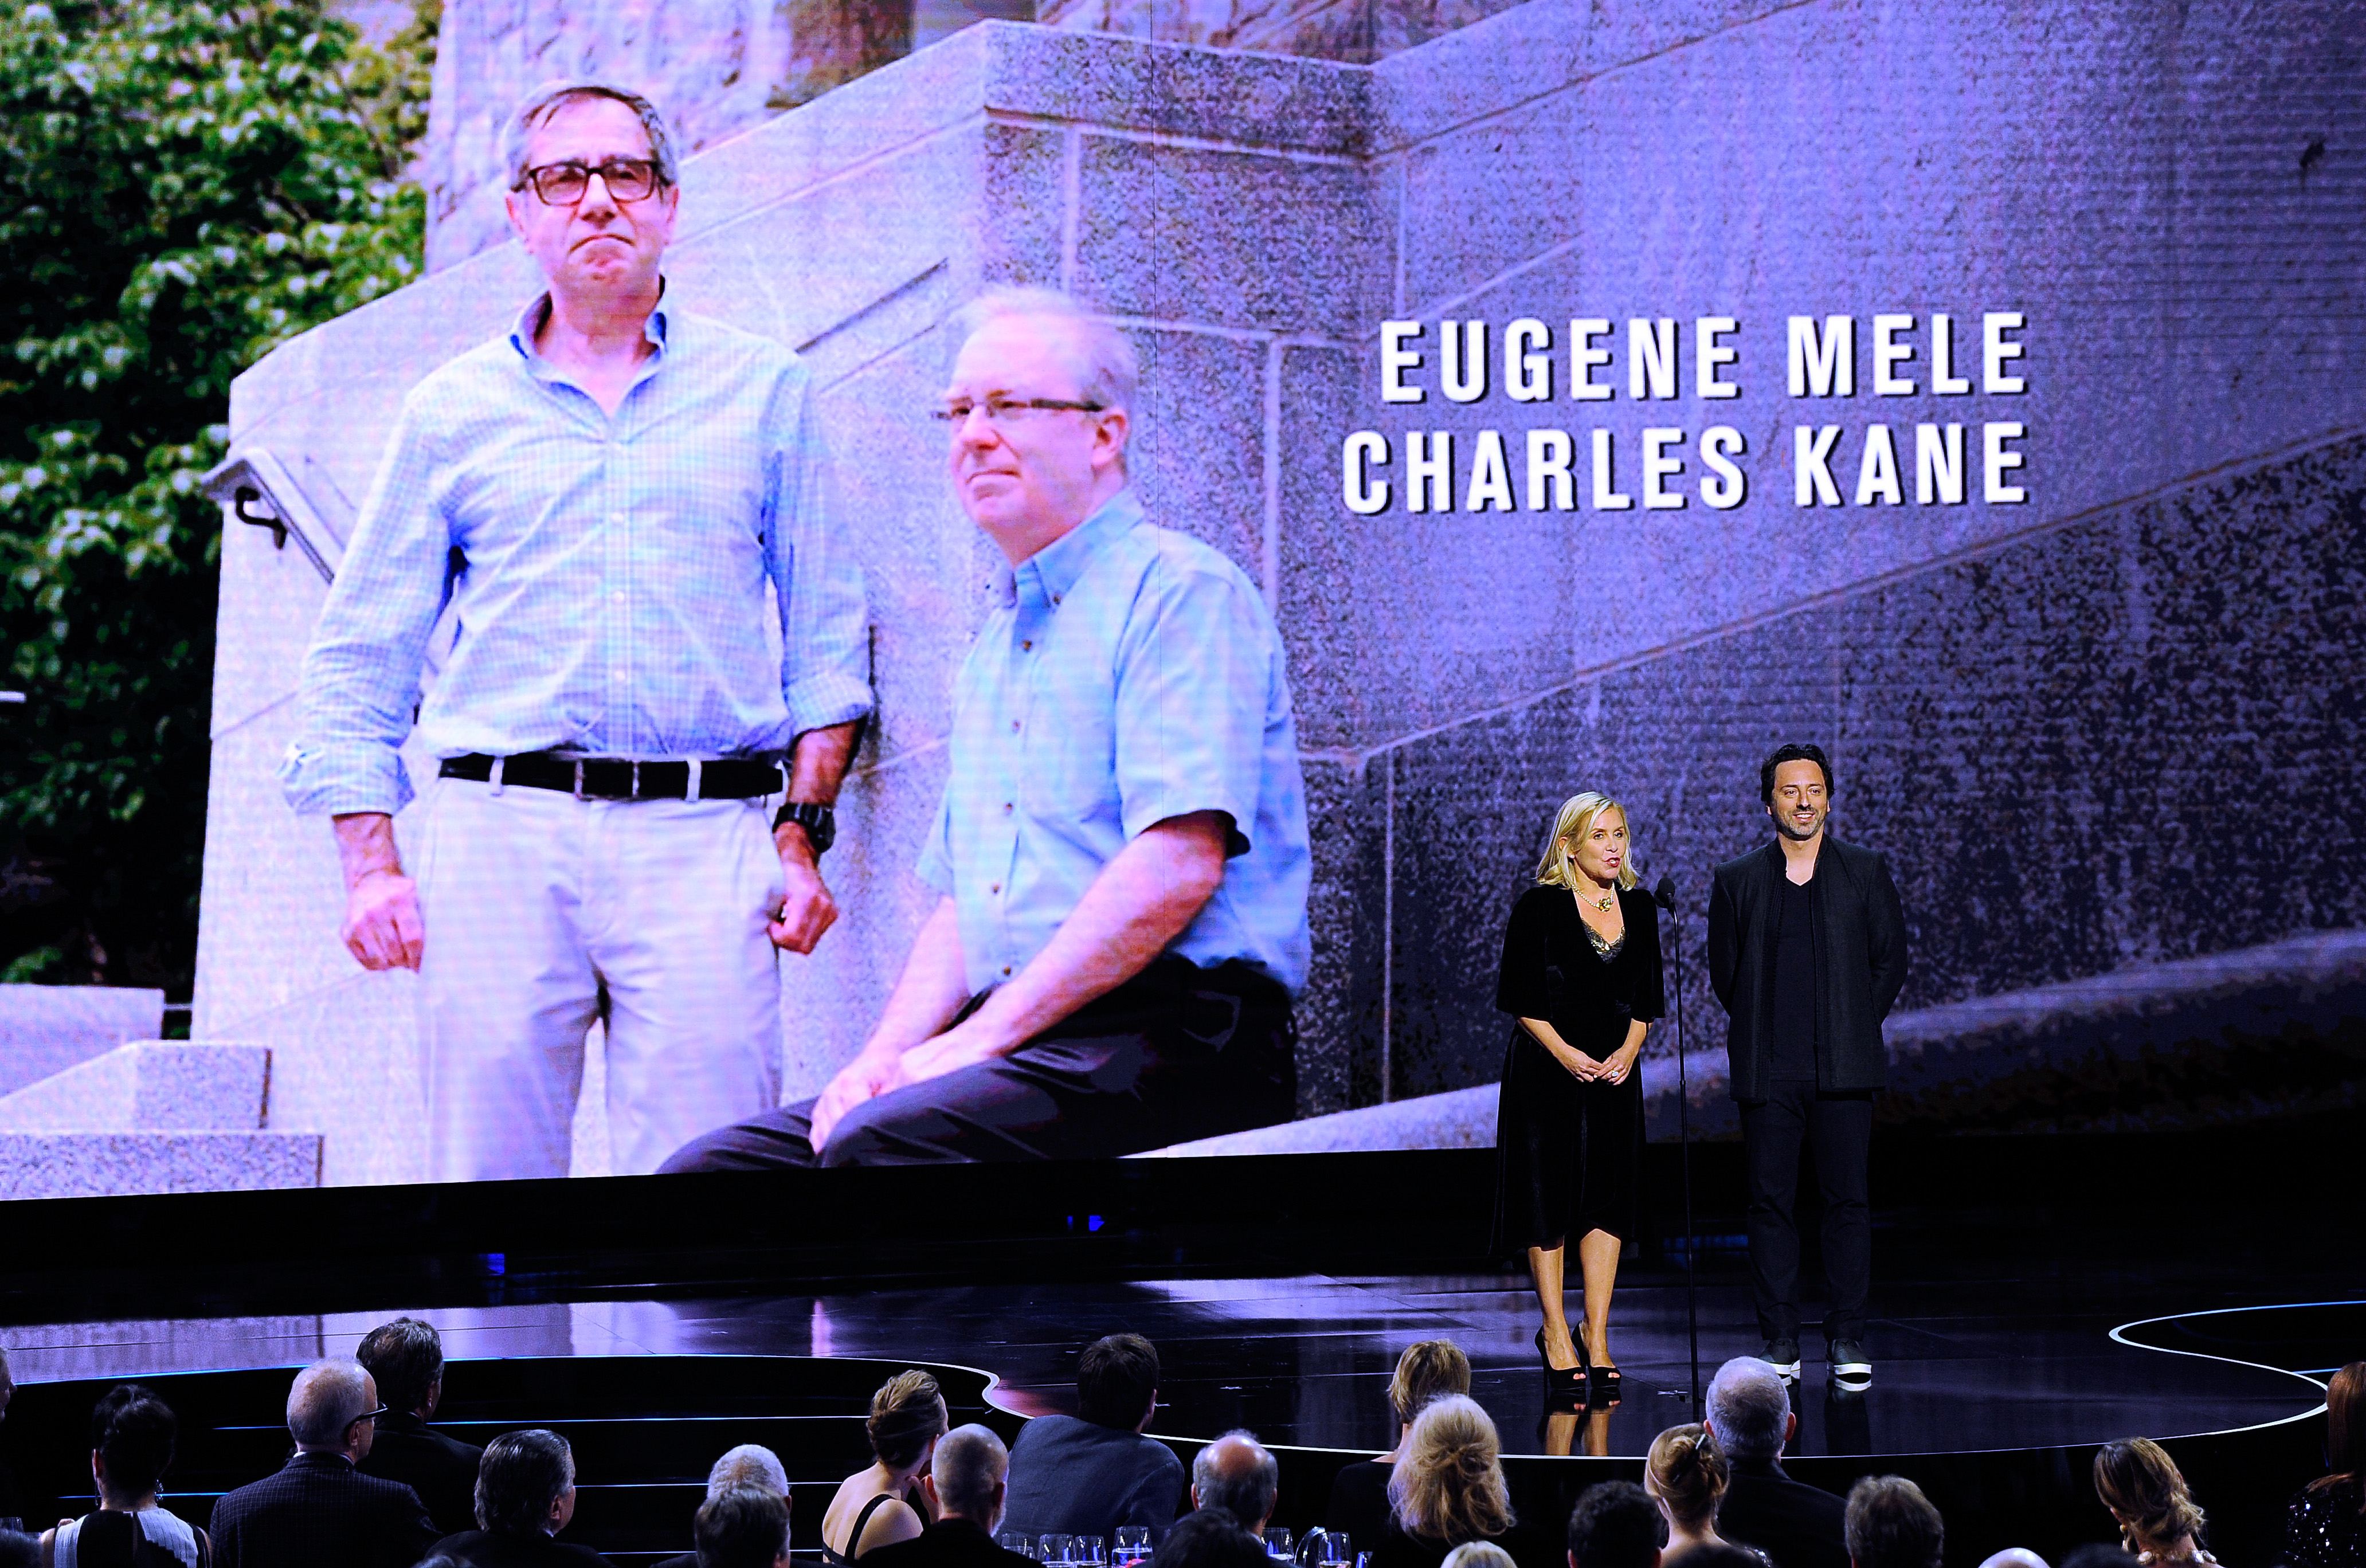 Presentation ceremony with background image of Kane and Mele